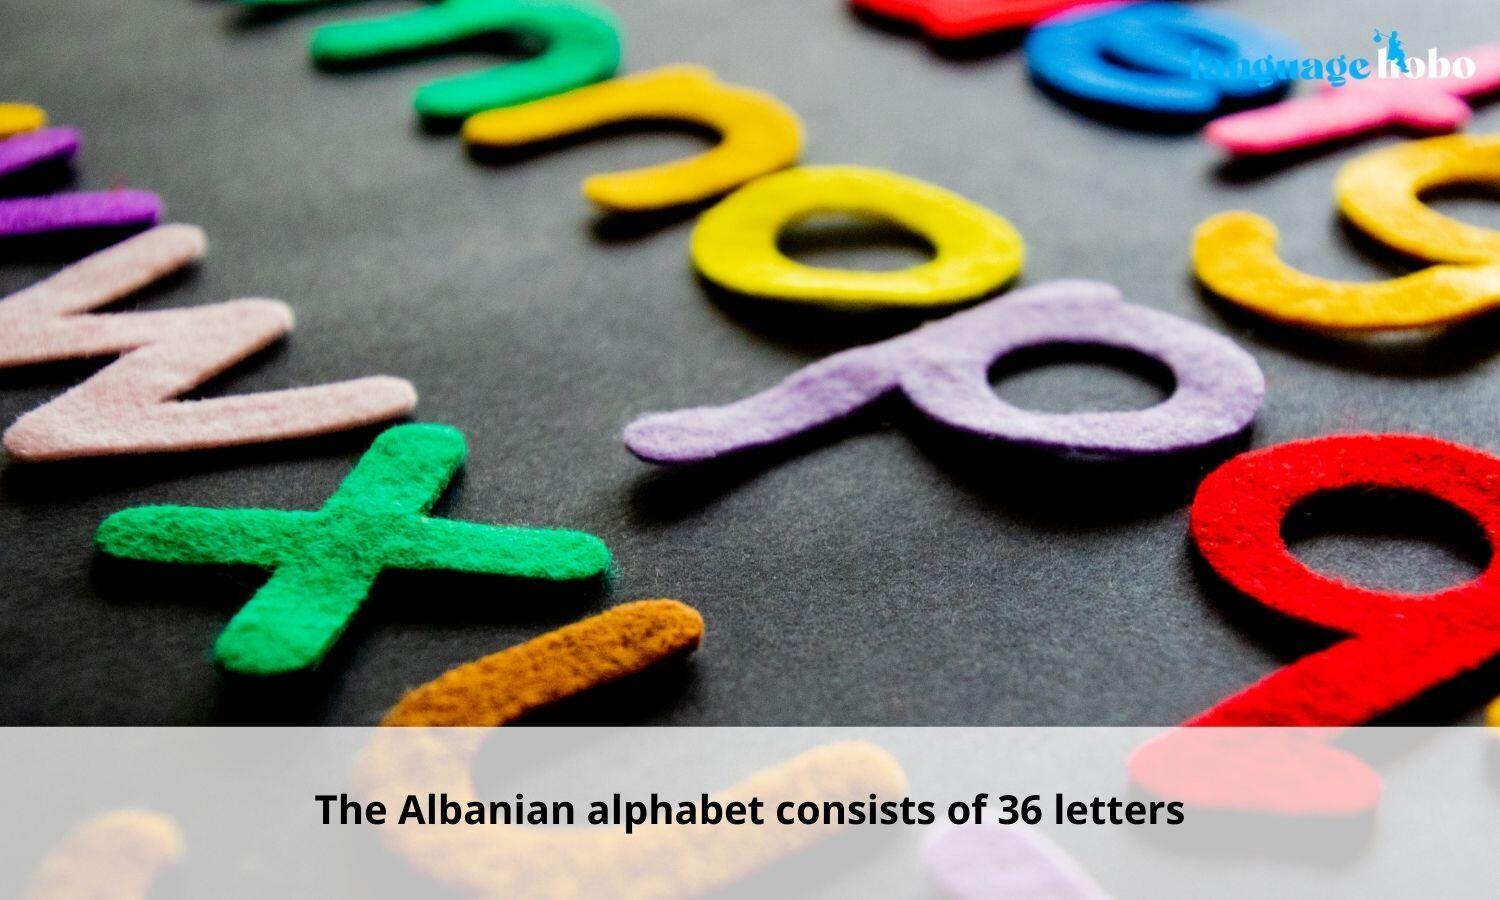 The albanian alphabet